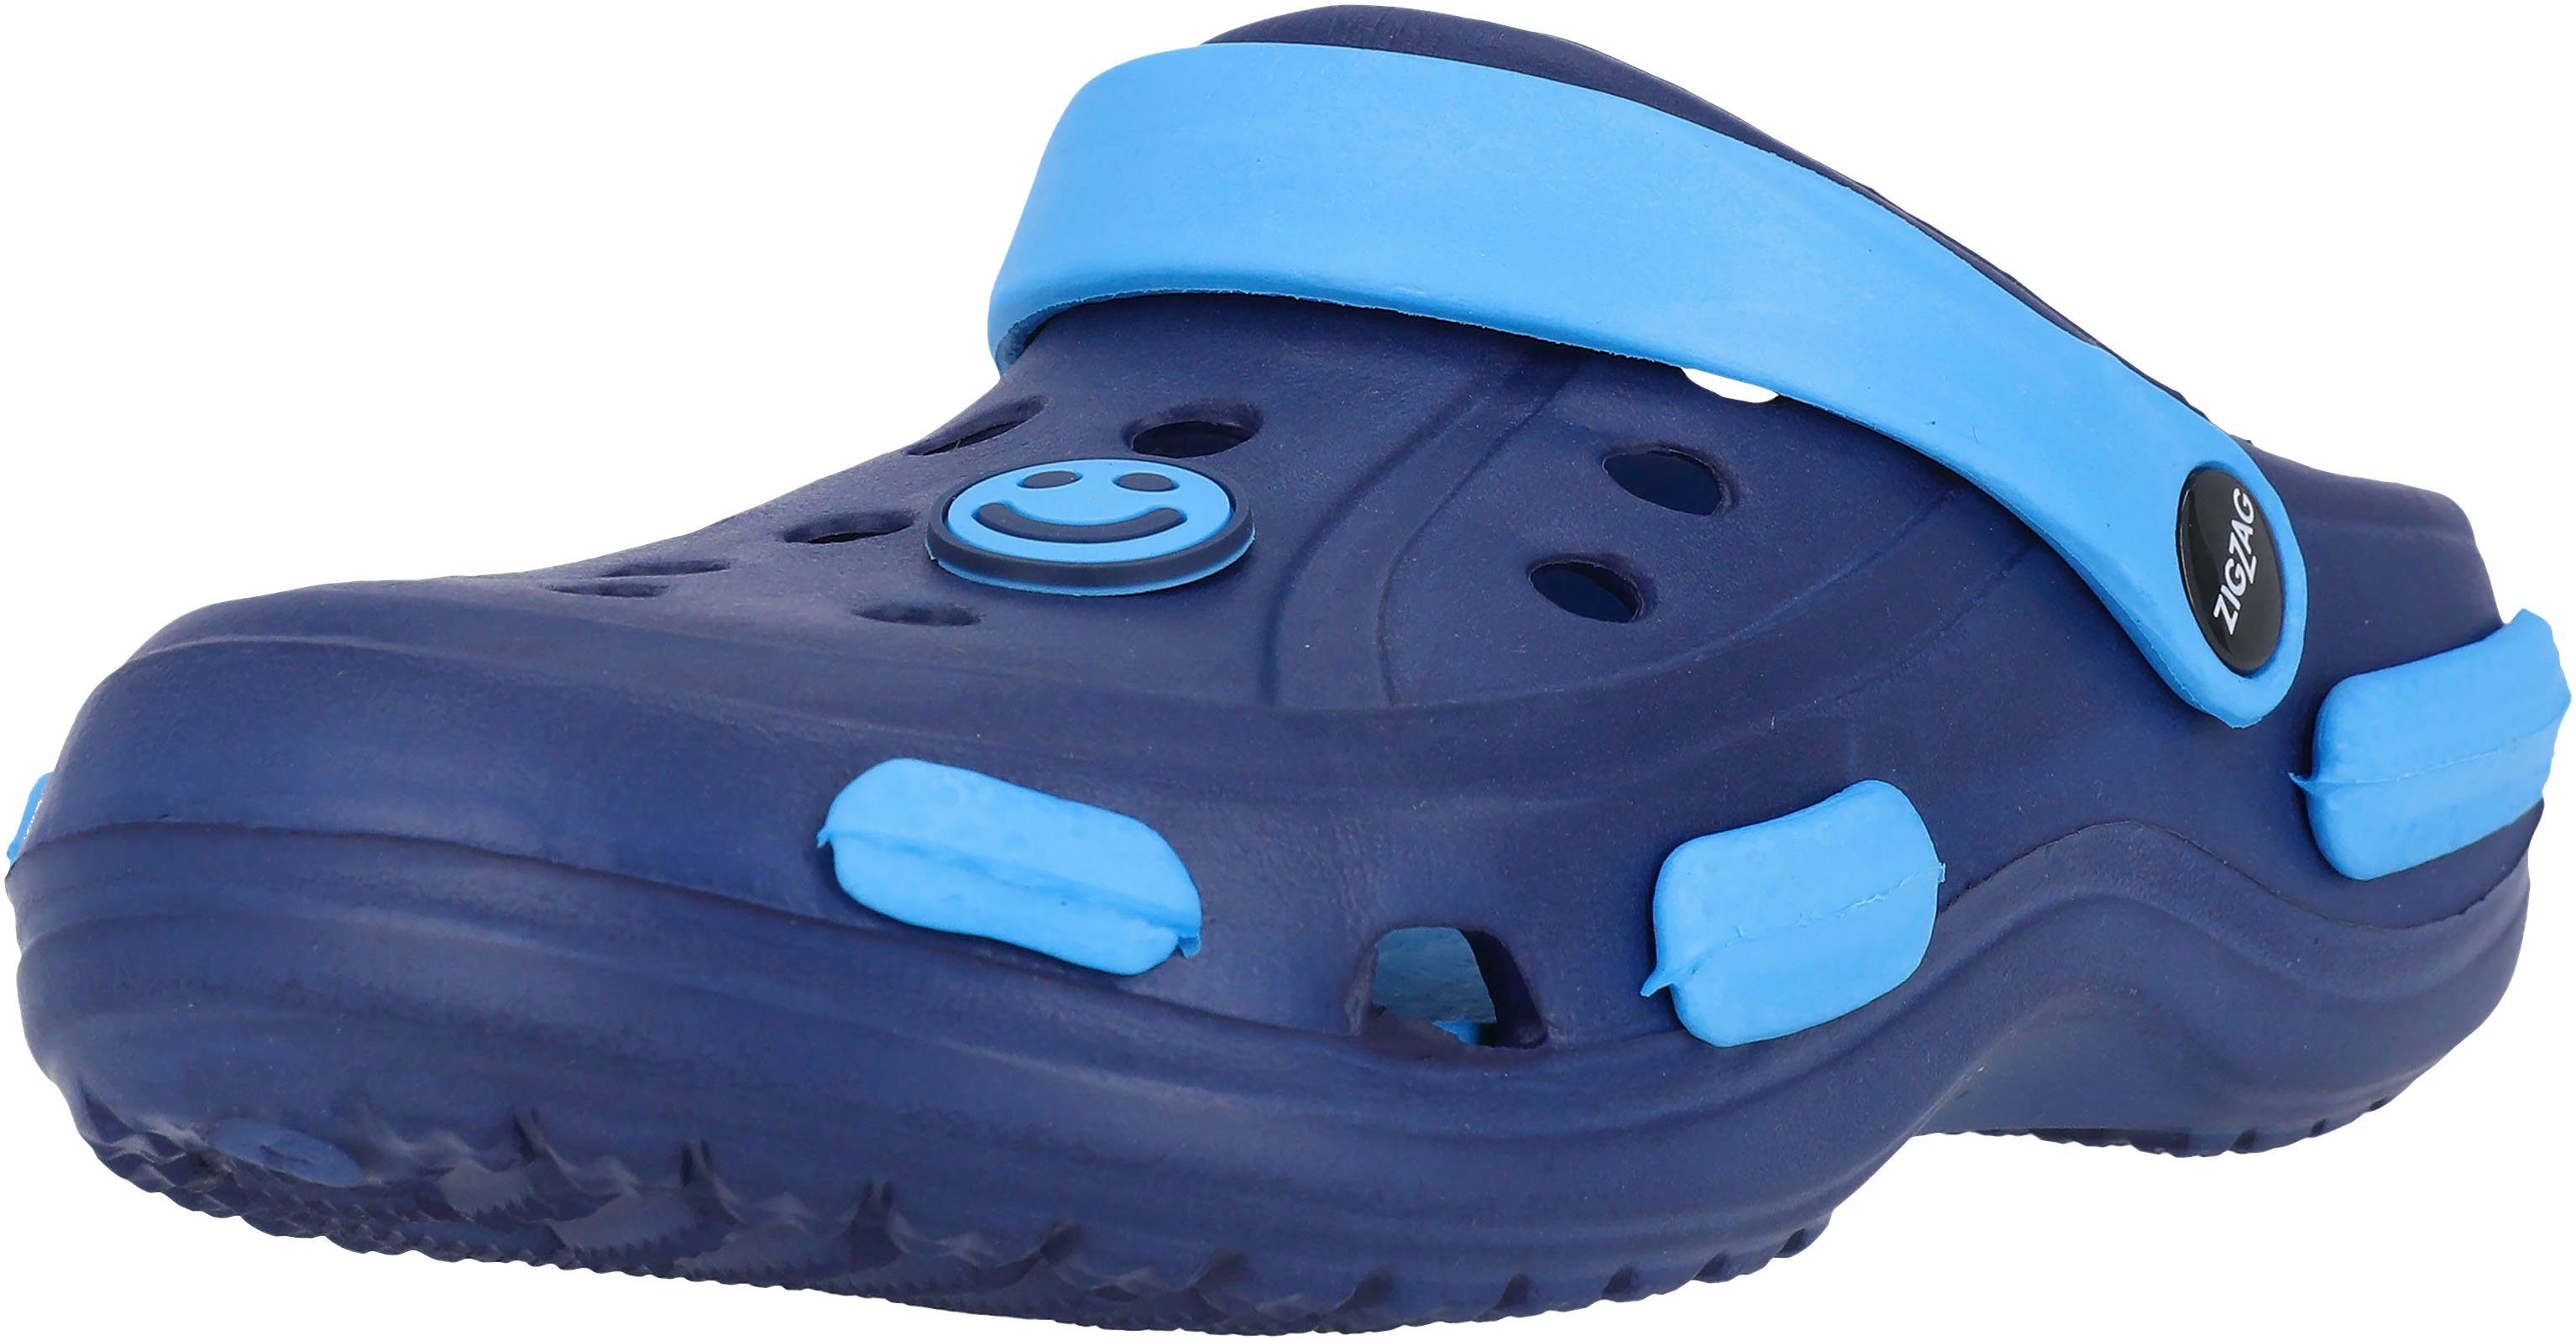 Sandale ZIGZAG navy-blau Naike